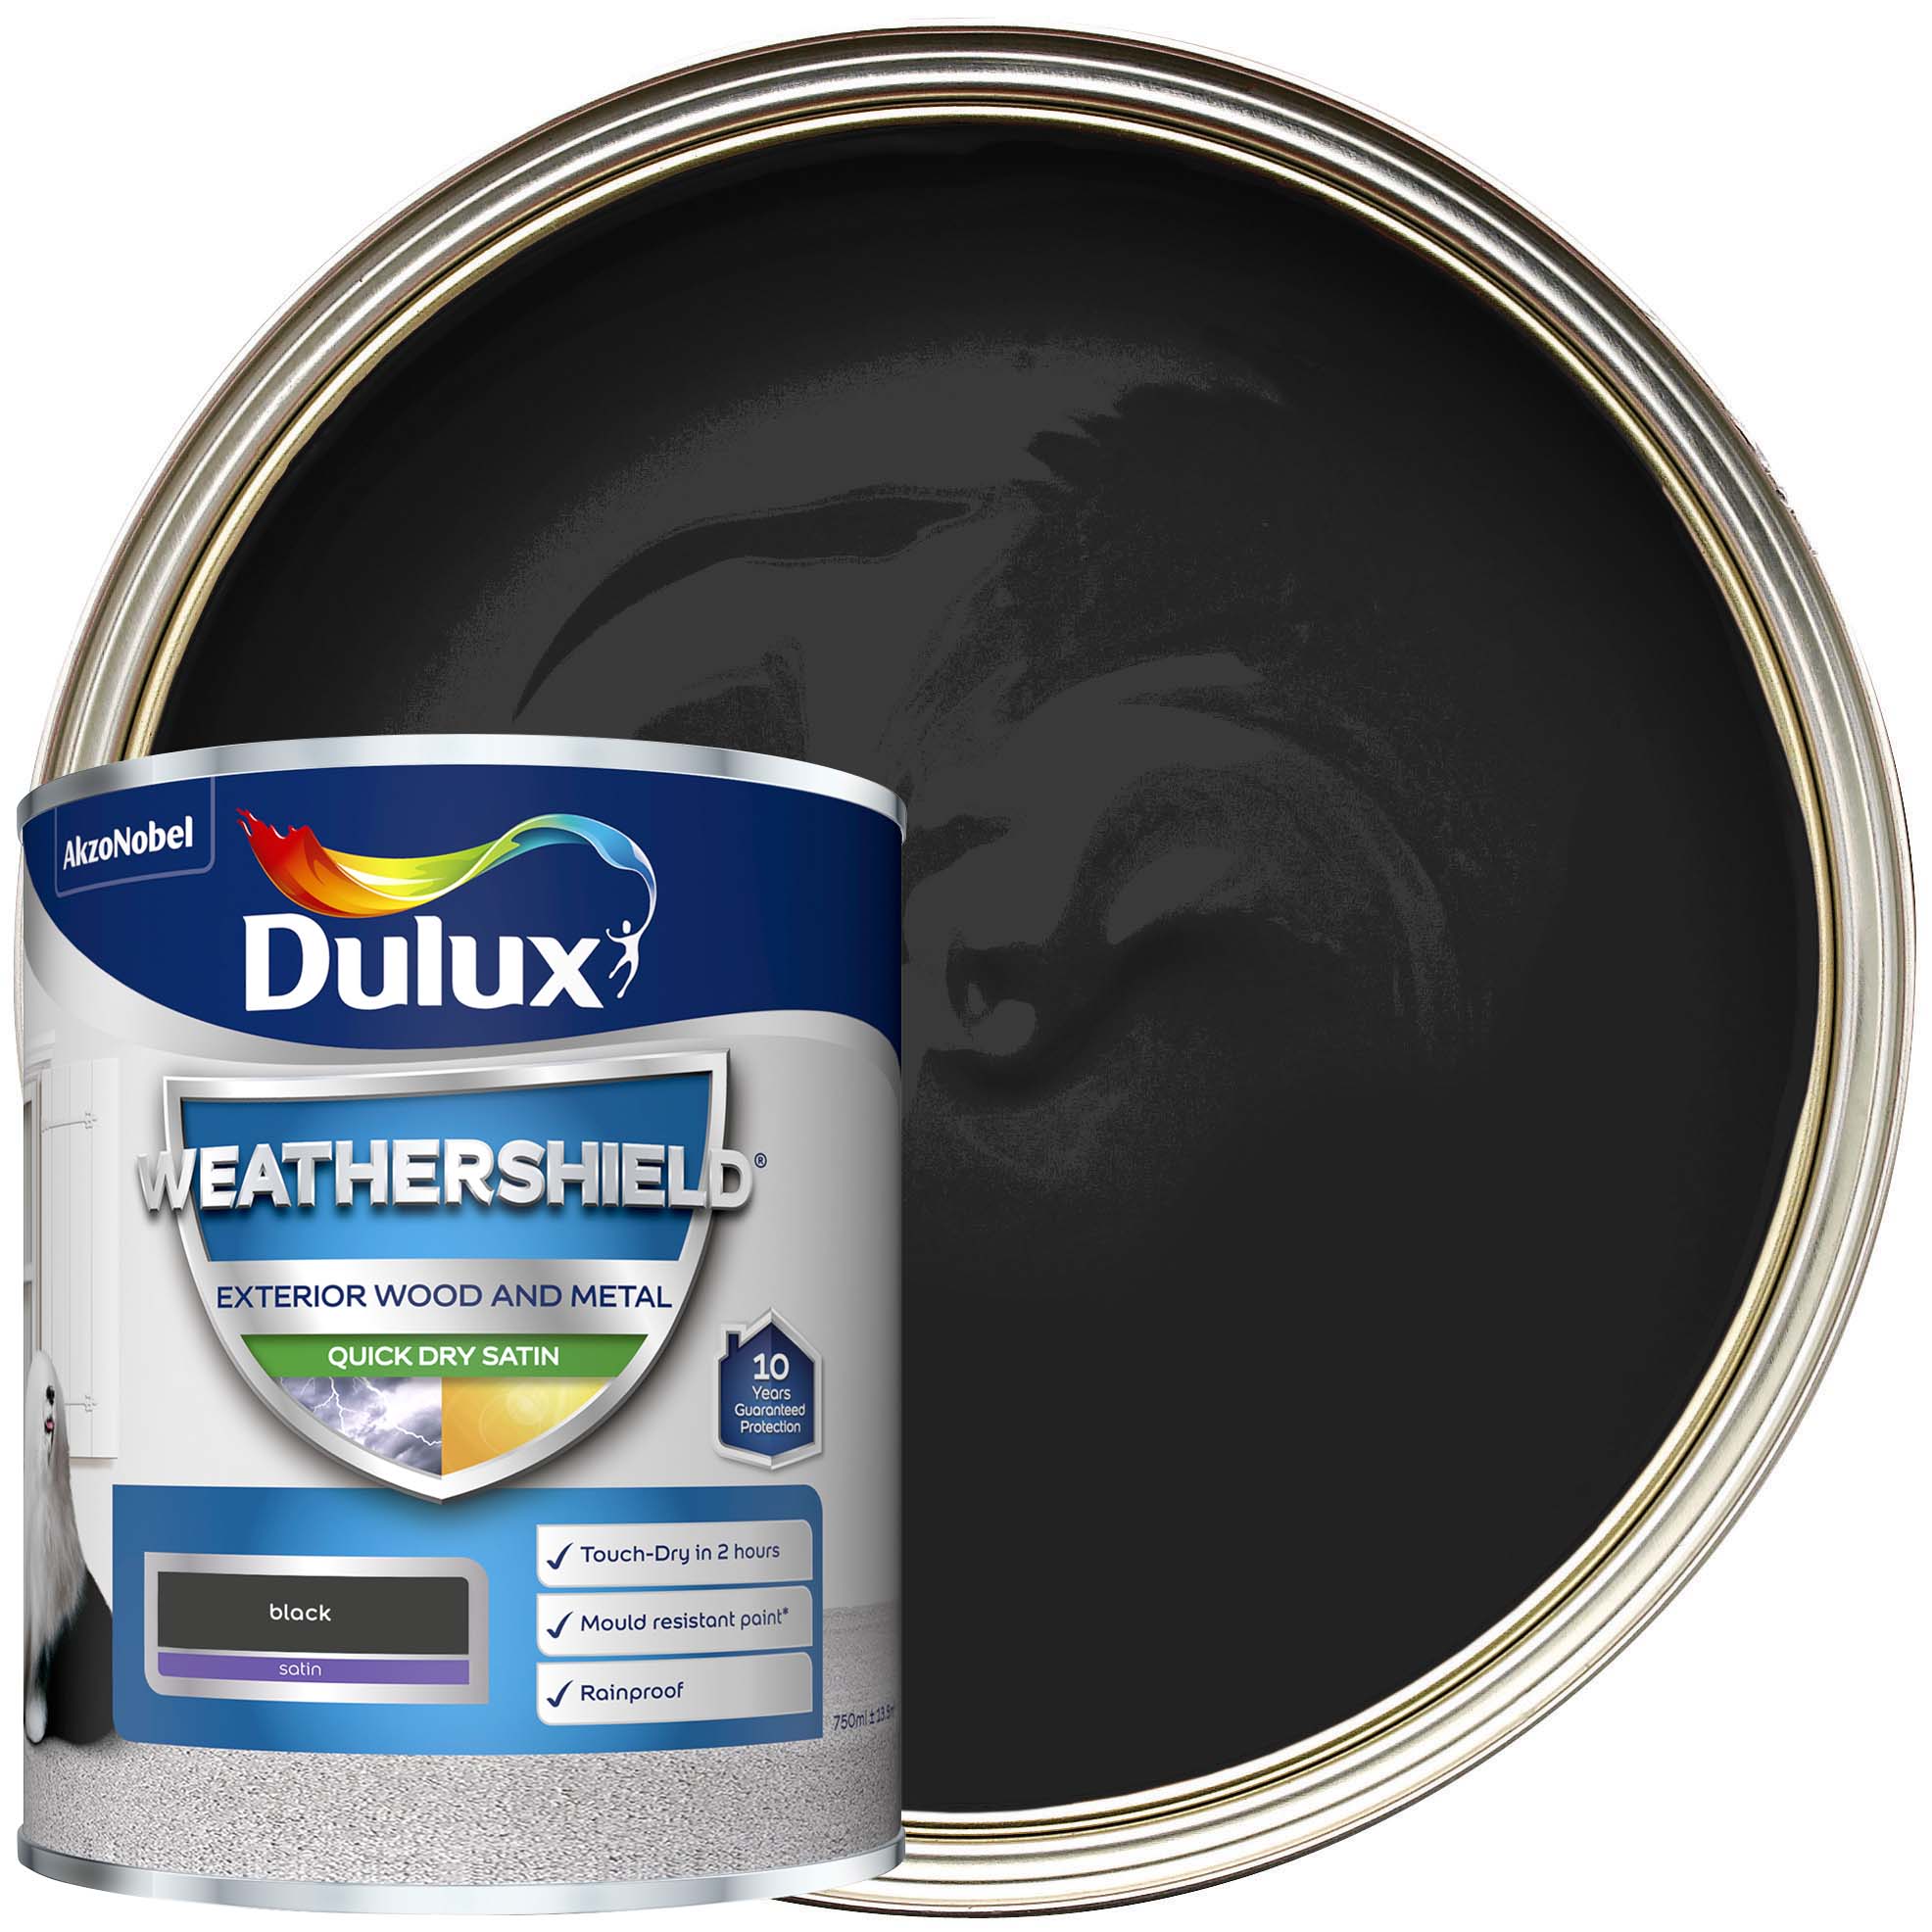 Image of Dulux Weathershield Quick Dry Satin Paint - Black - 750ml